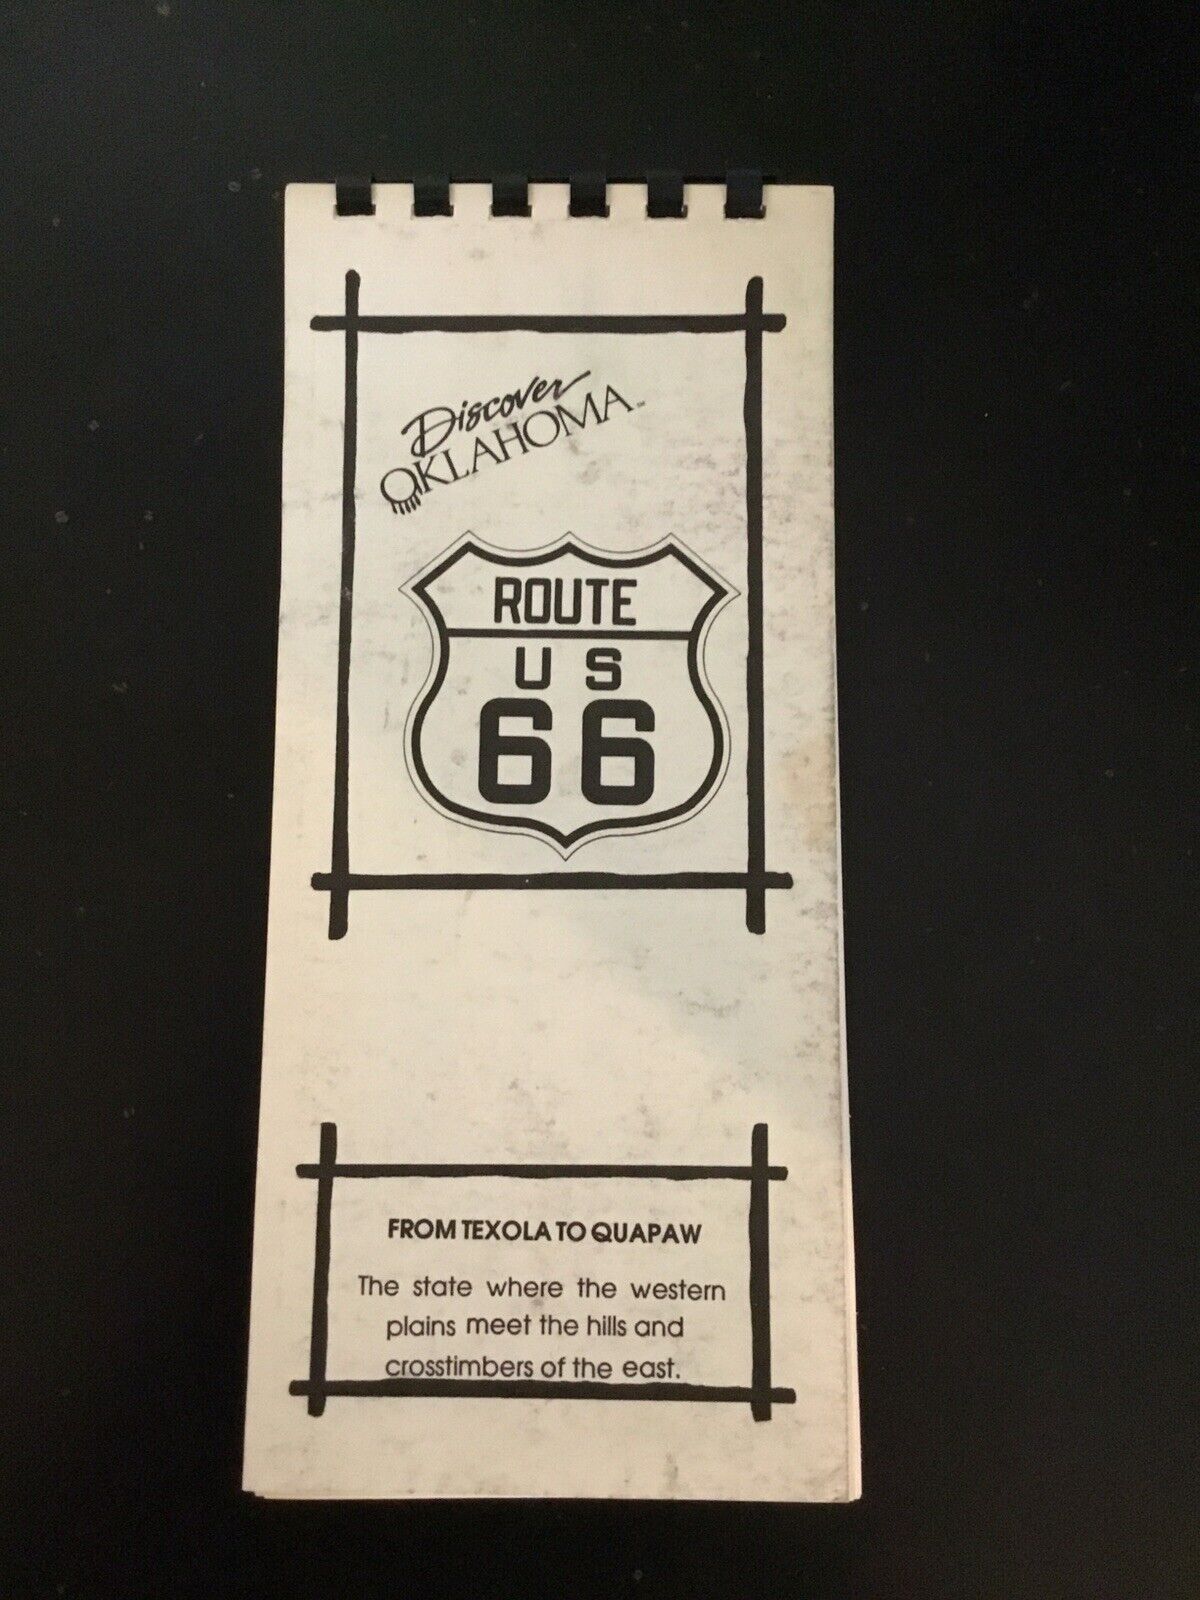 Discover Oklahoma  Route 66 40 P Spiral Bound Book Oklahoma Tourism 4 x 9 1990